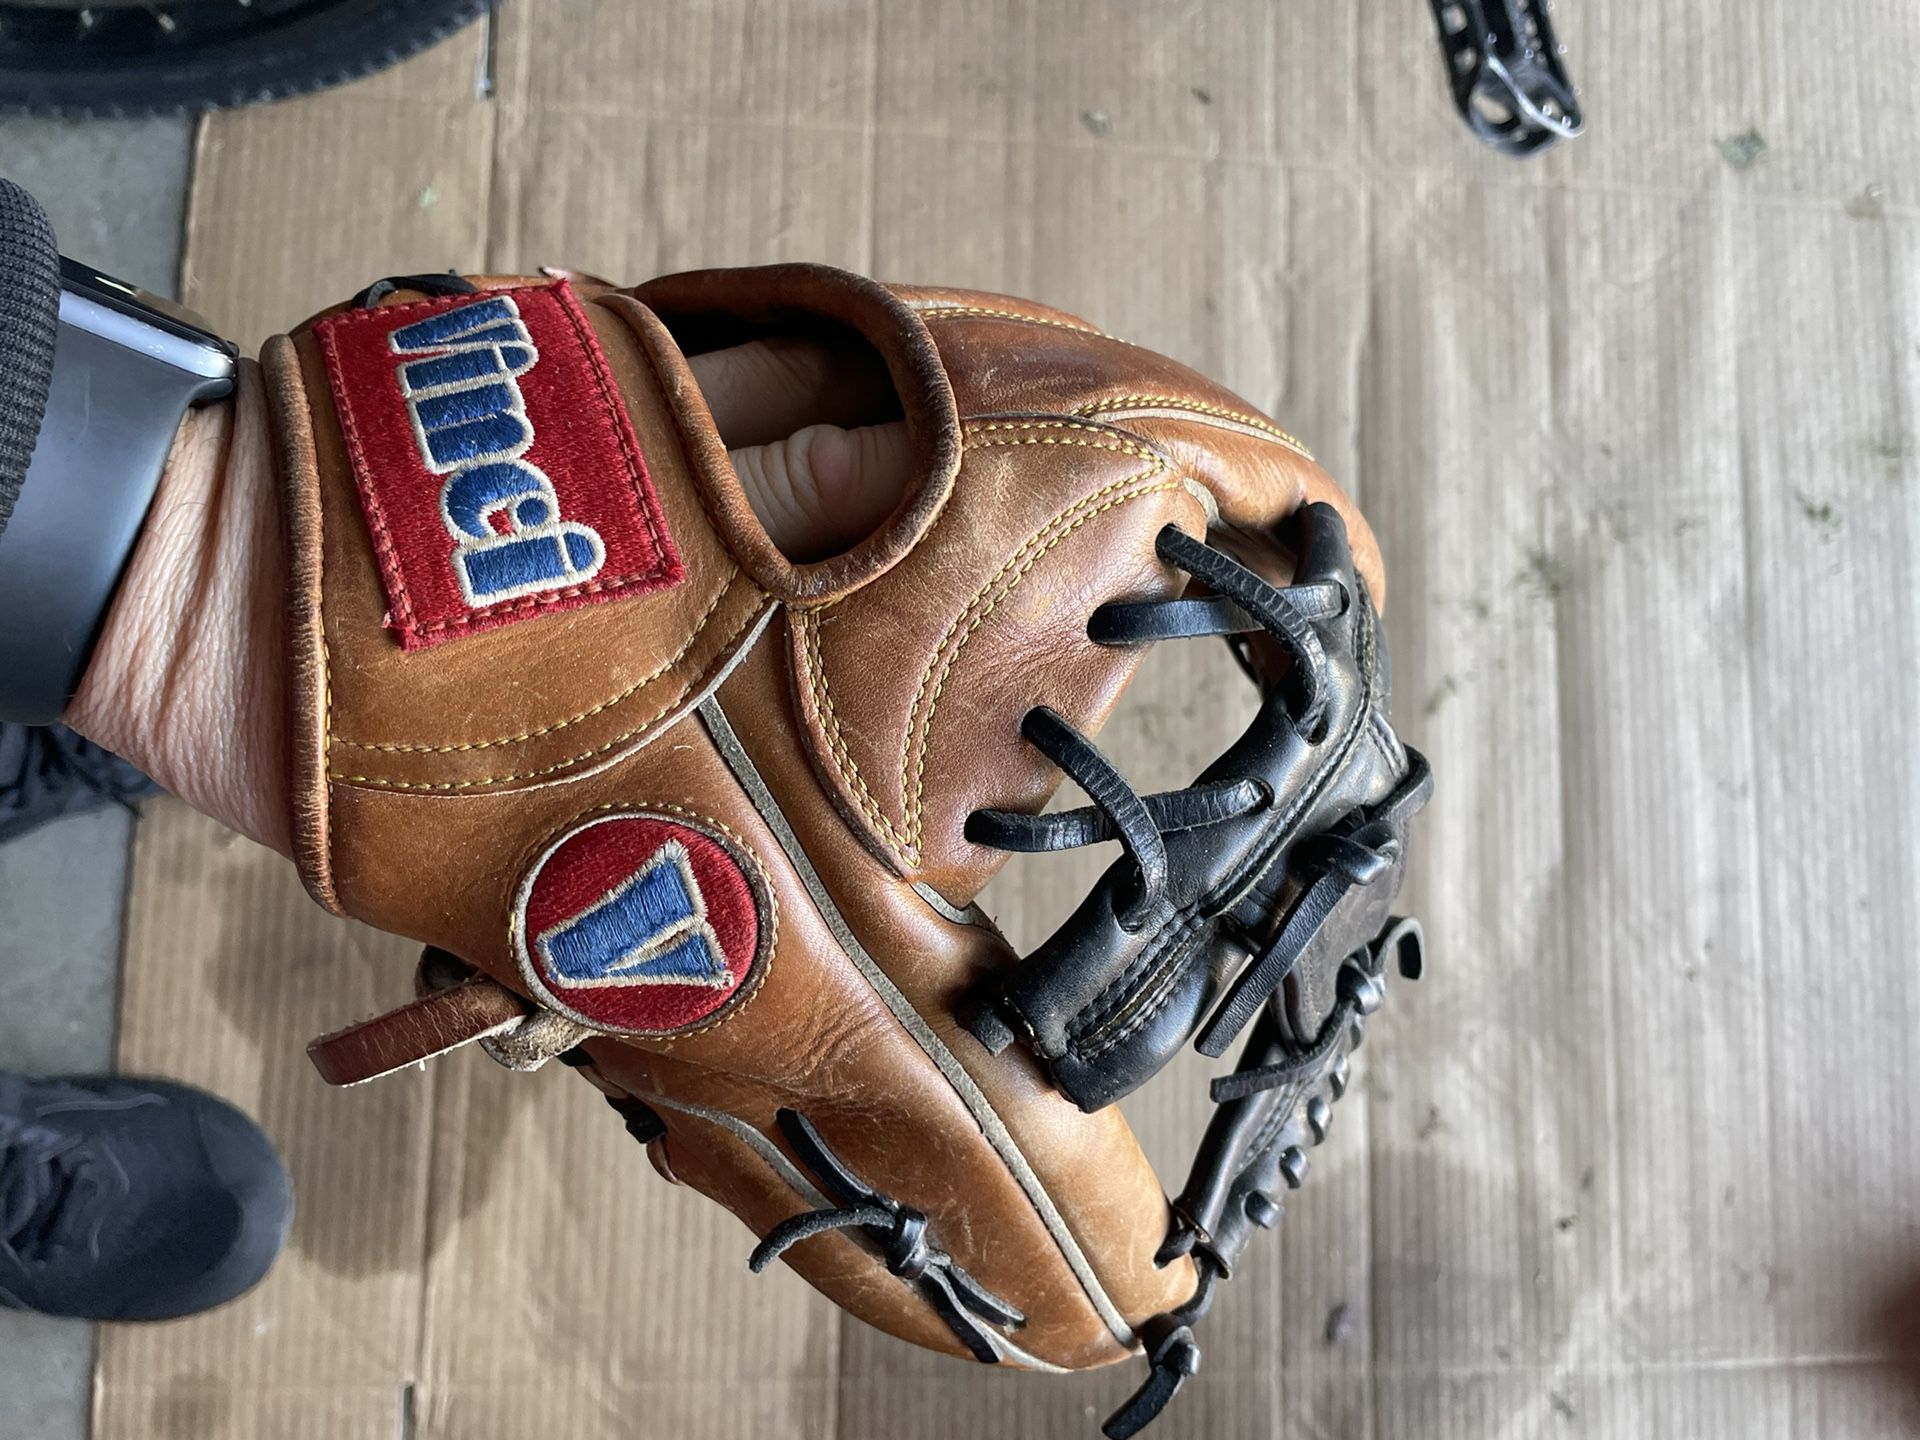 Vinci Professional Model Baseball Glove